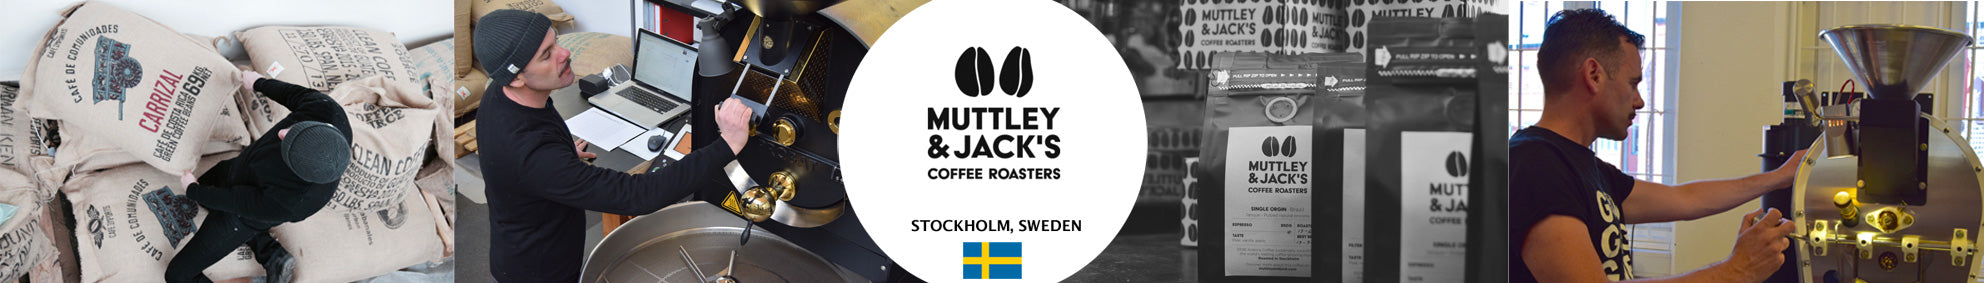 Subscription Coffee Roaster - Muttley & Jacks